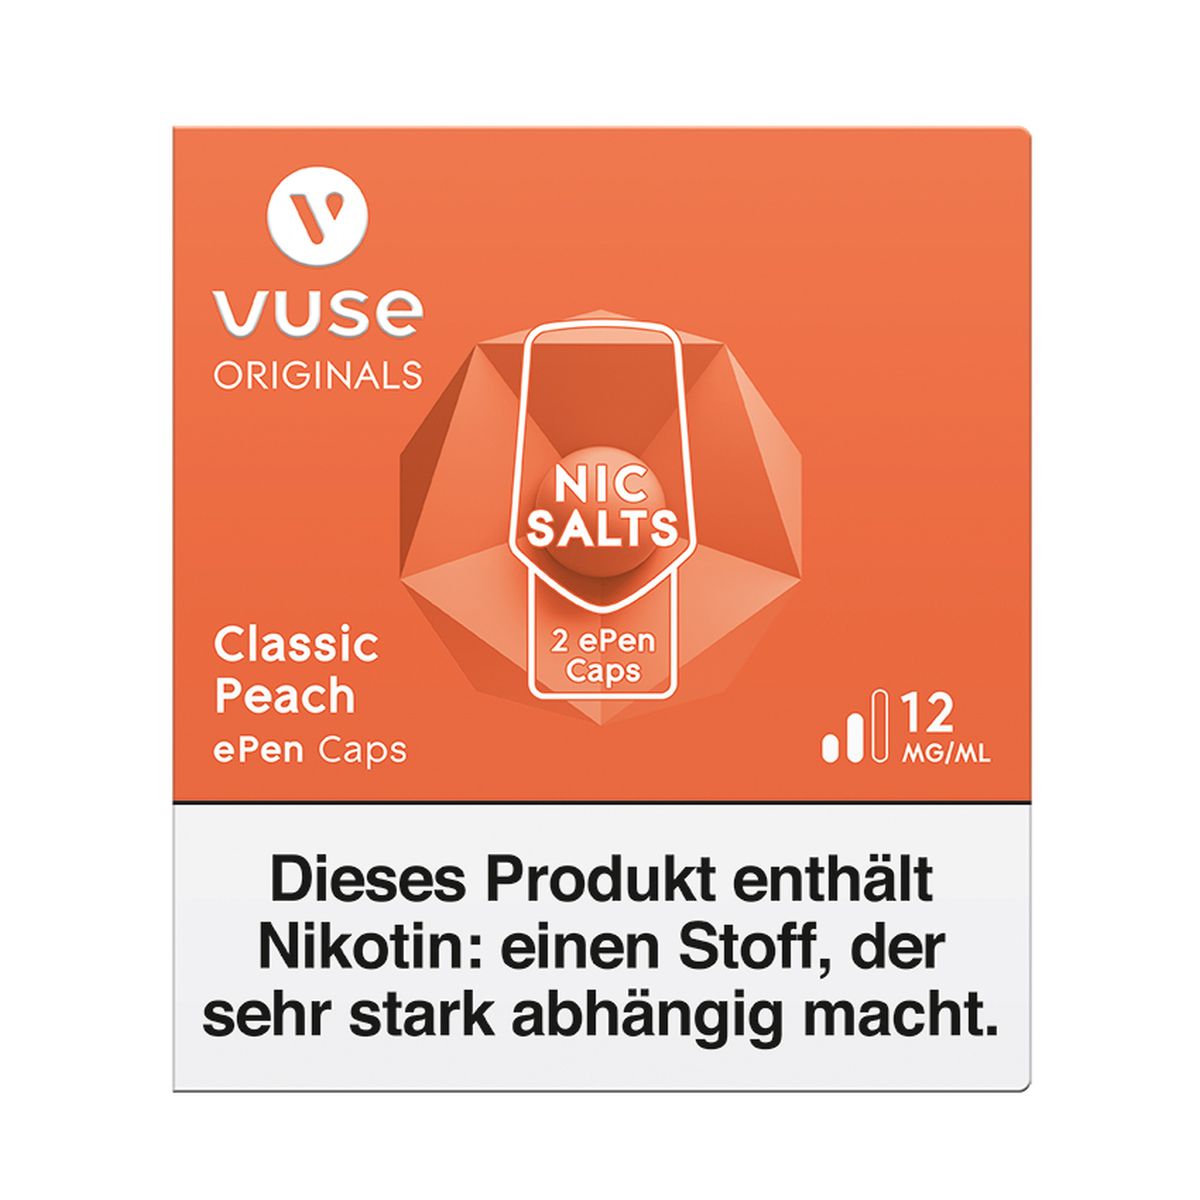 Vuse Vuse ePen Caps Classic Peach Nic Salts 12mg Nikotin 2ml bei www.Tabakring.de kaufen